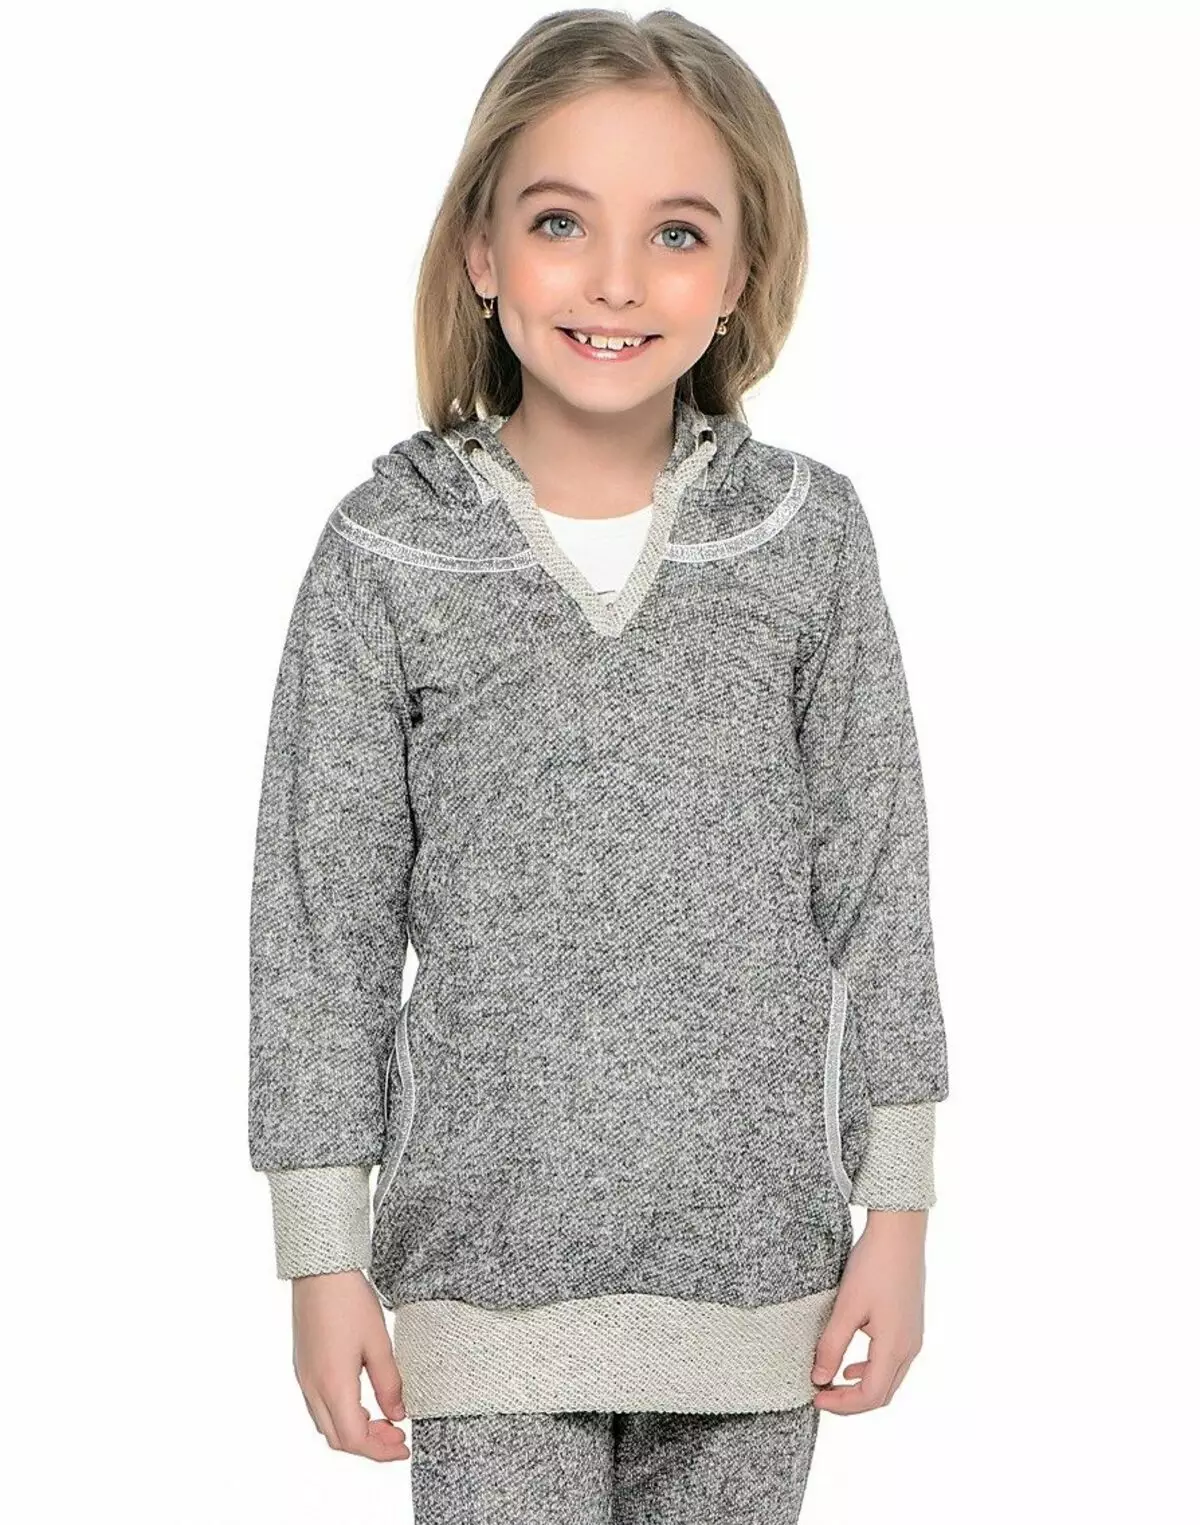 Sweatshirt for the girl (80 photos): adolescent models for girls 10-12 and 13-14 years old, Sweatshirt Faberlik, Nekst, on Fur, Lightning 1326_67